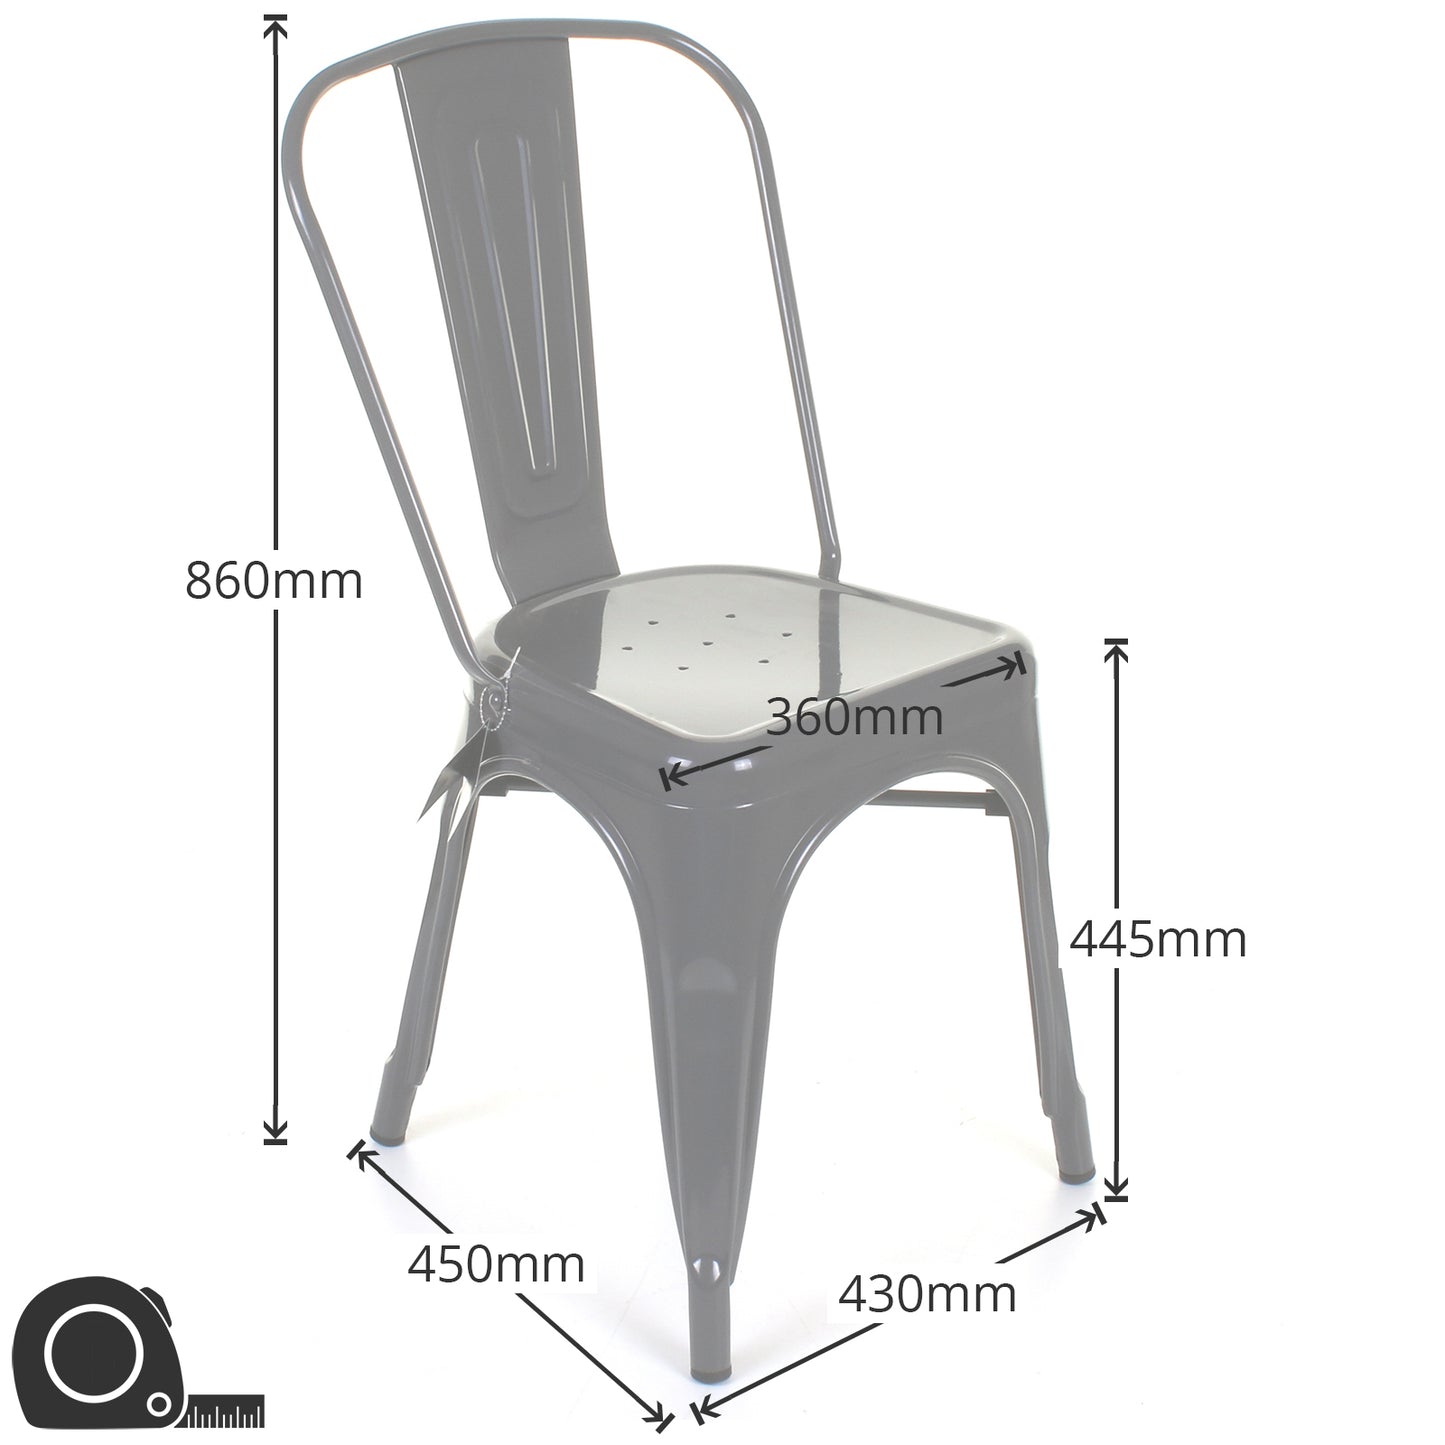 5PC Prato Table & 4 Siena Chairs Set - Graphite Grey